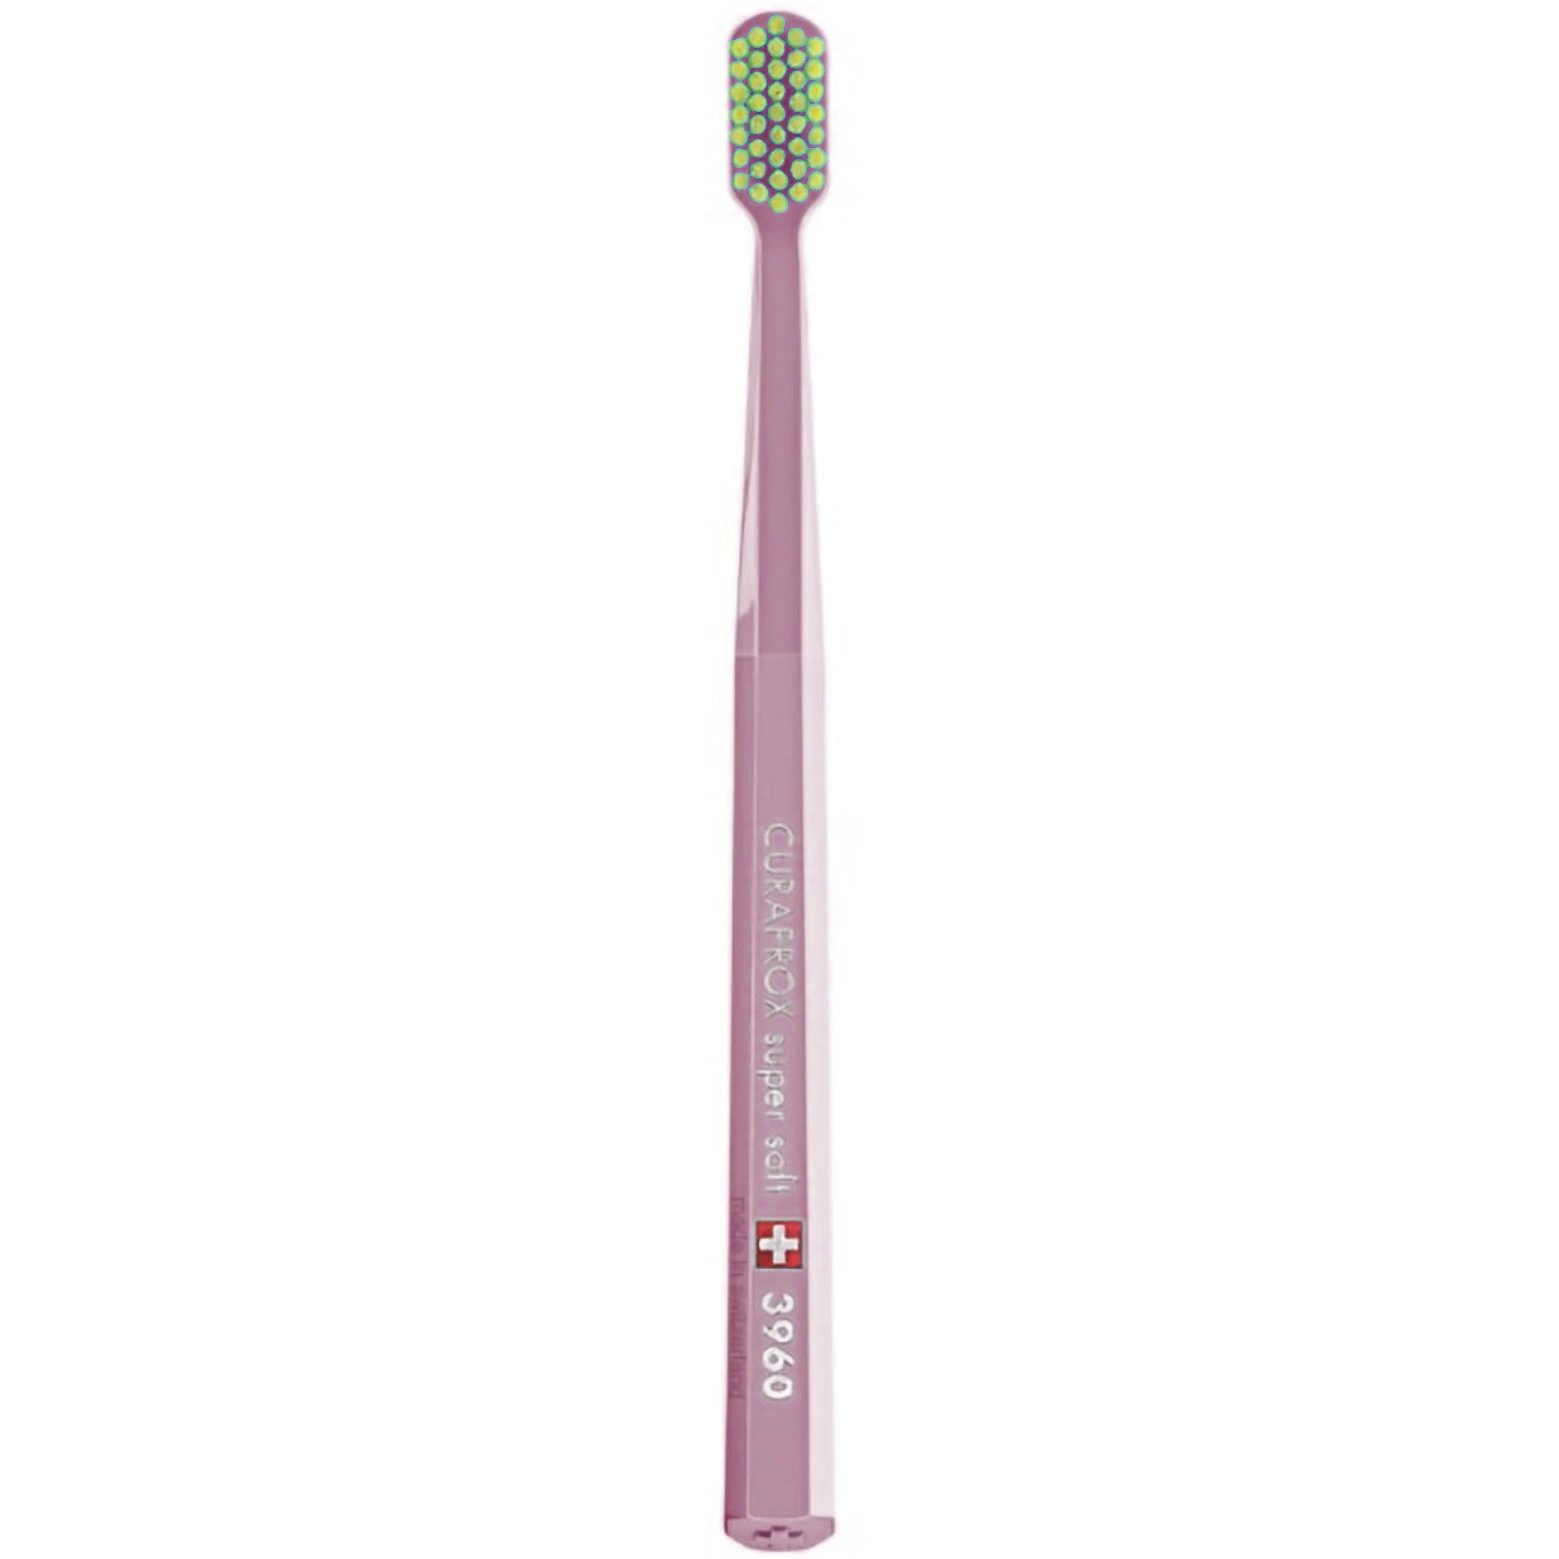 Curaprox CS 3960 Super Soft Toothbrush Πολύ Μαλακή Οδοντόβουρτσα με Εξαιρετικά Απαλές & Ανθεκτικές Τρίχες Curen για Αποτελεσματικό Καθαρισμό 1 Τεμάχιο – Σκούρο Ροζ / Κίτρινο